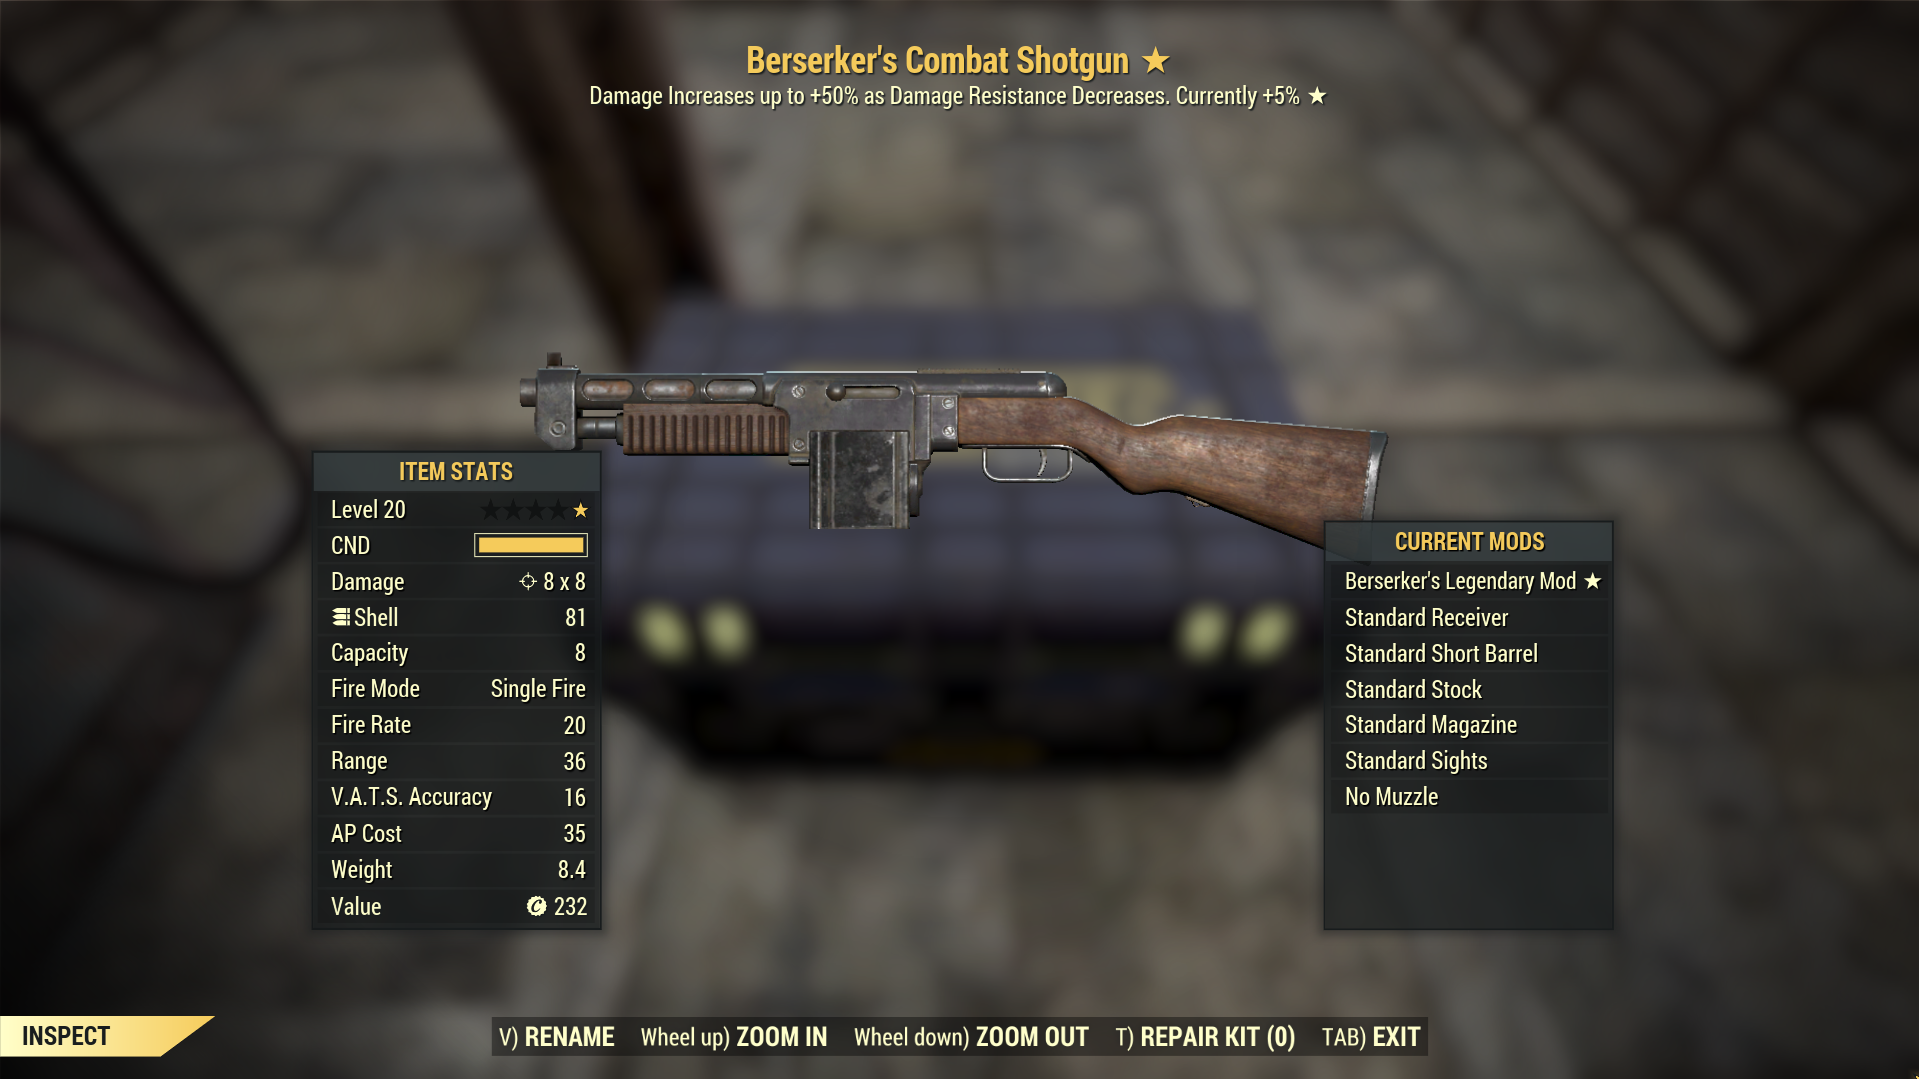 A legendary combat shotgun in Fallout 76